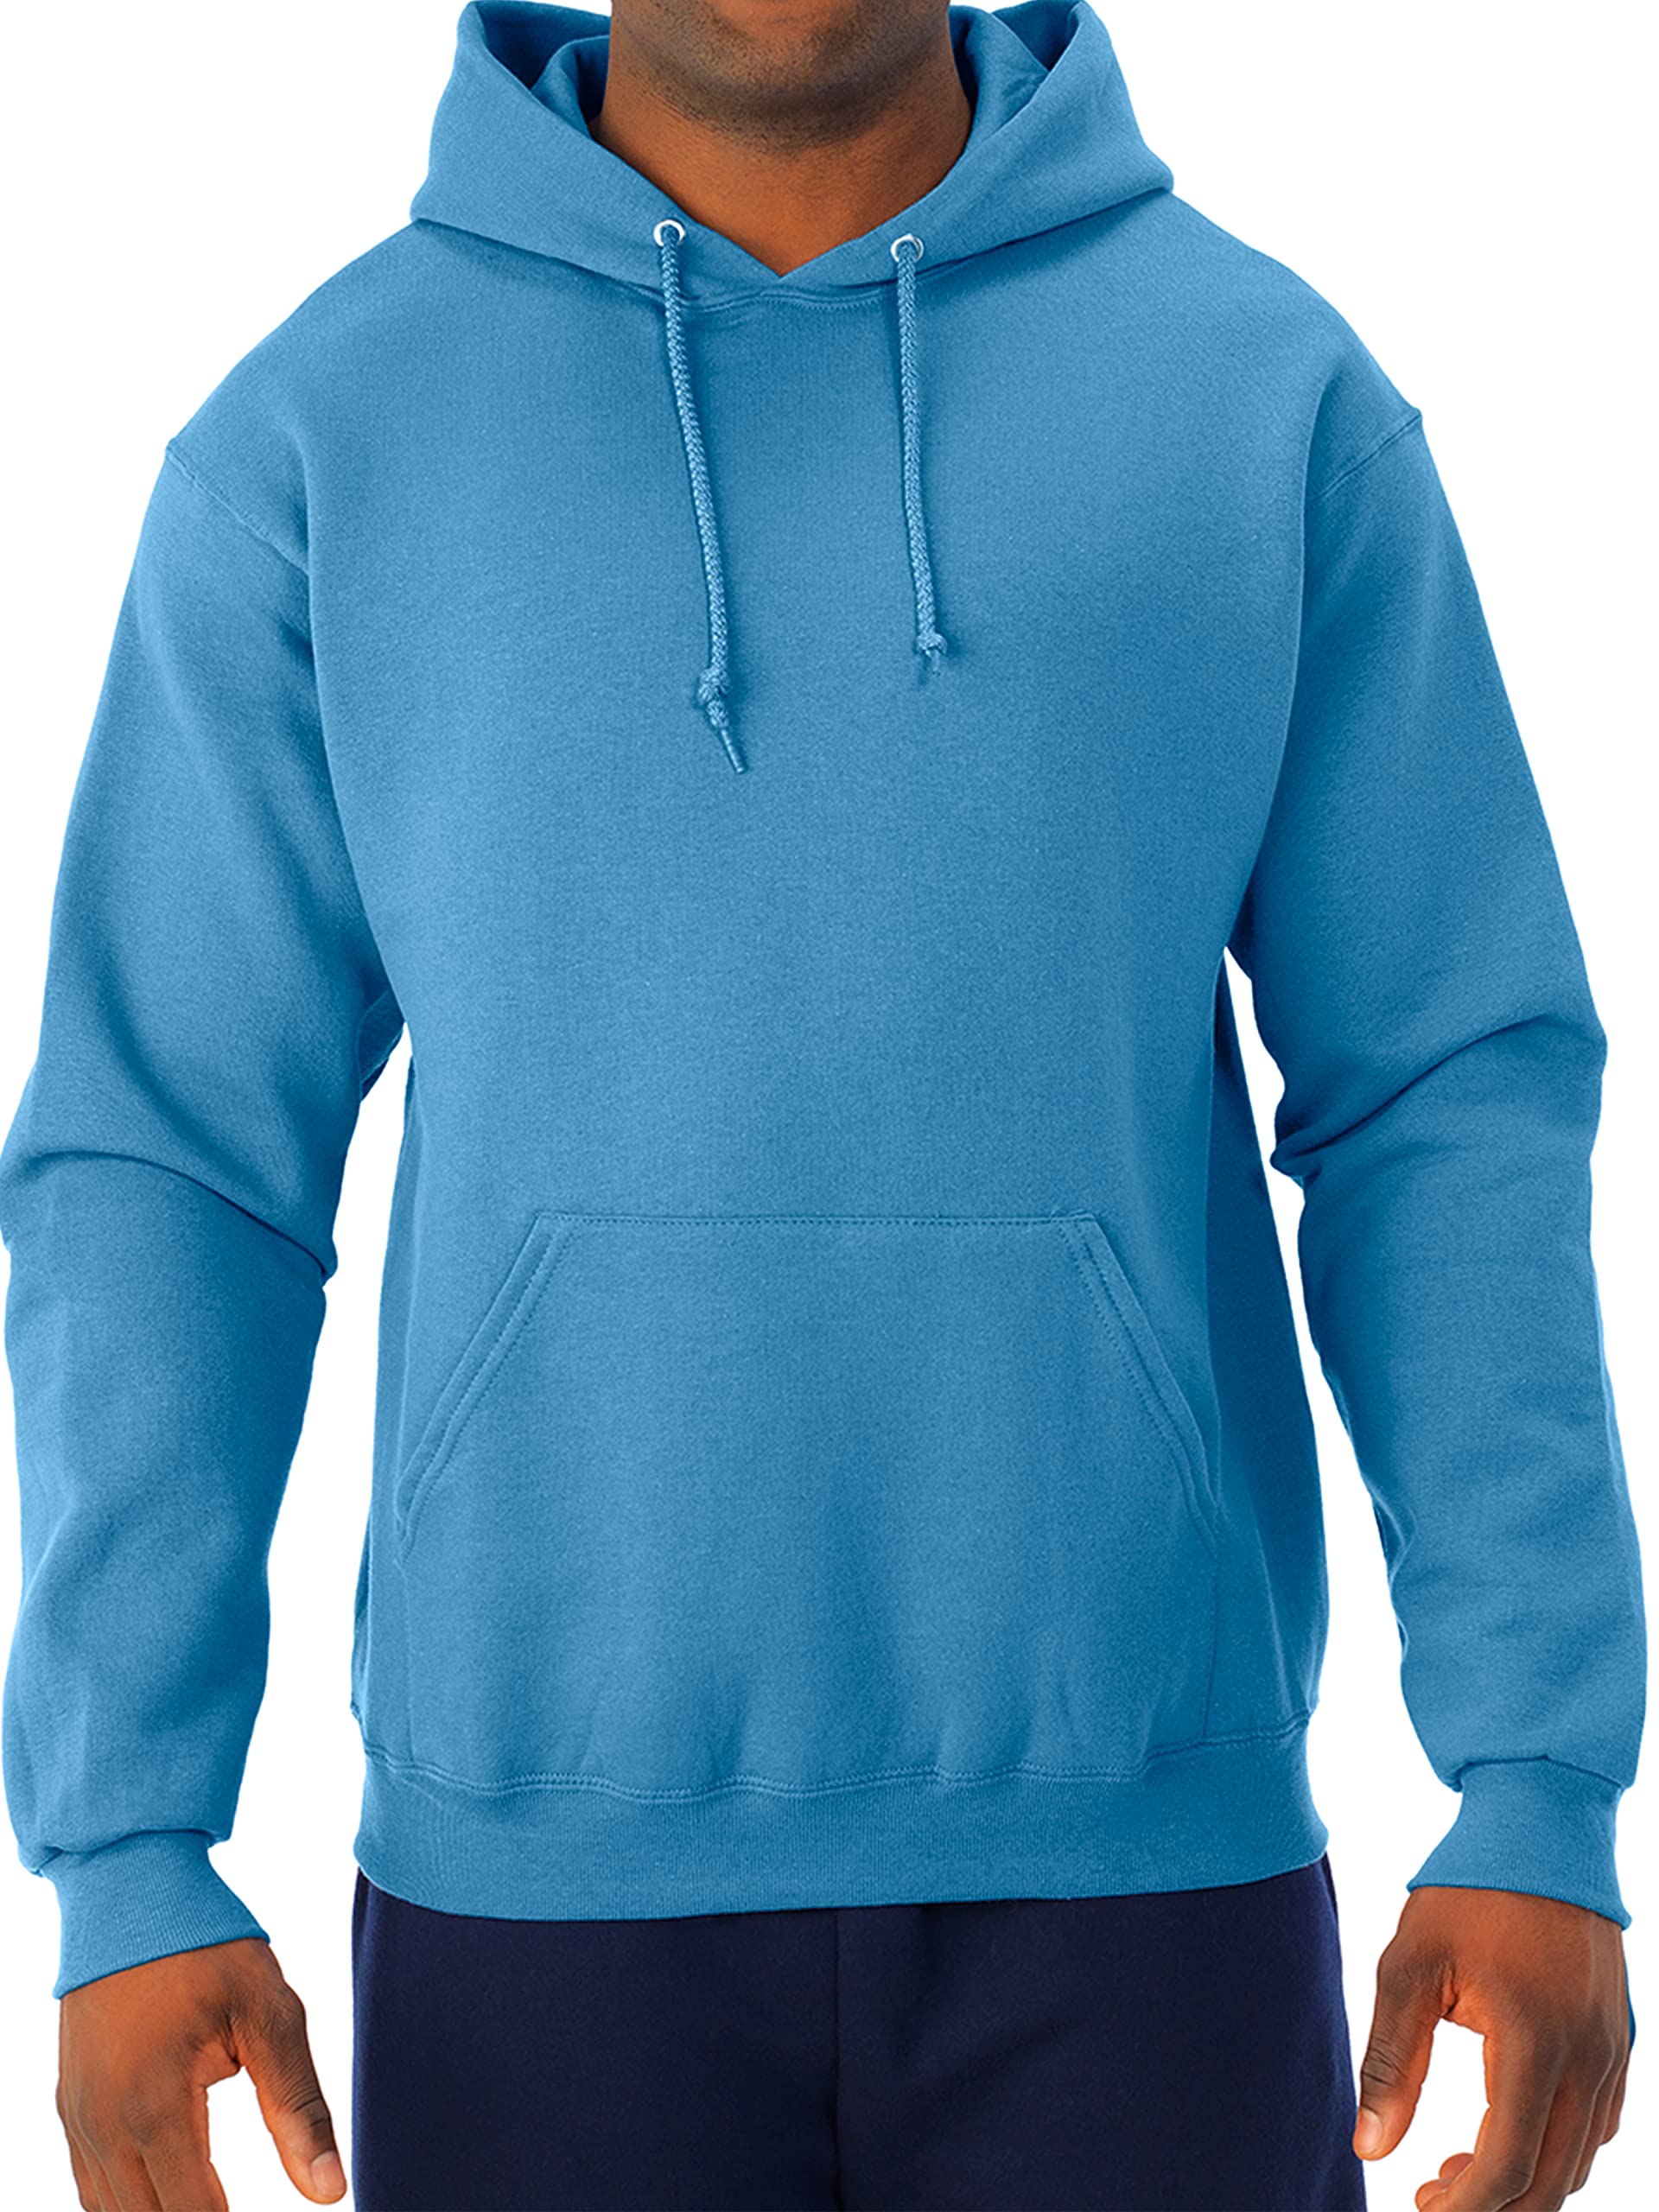 Jerzees Men’s NuBlend Hoodies & Sweatshirts (Retired Colors)